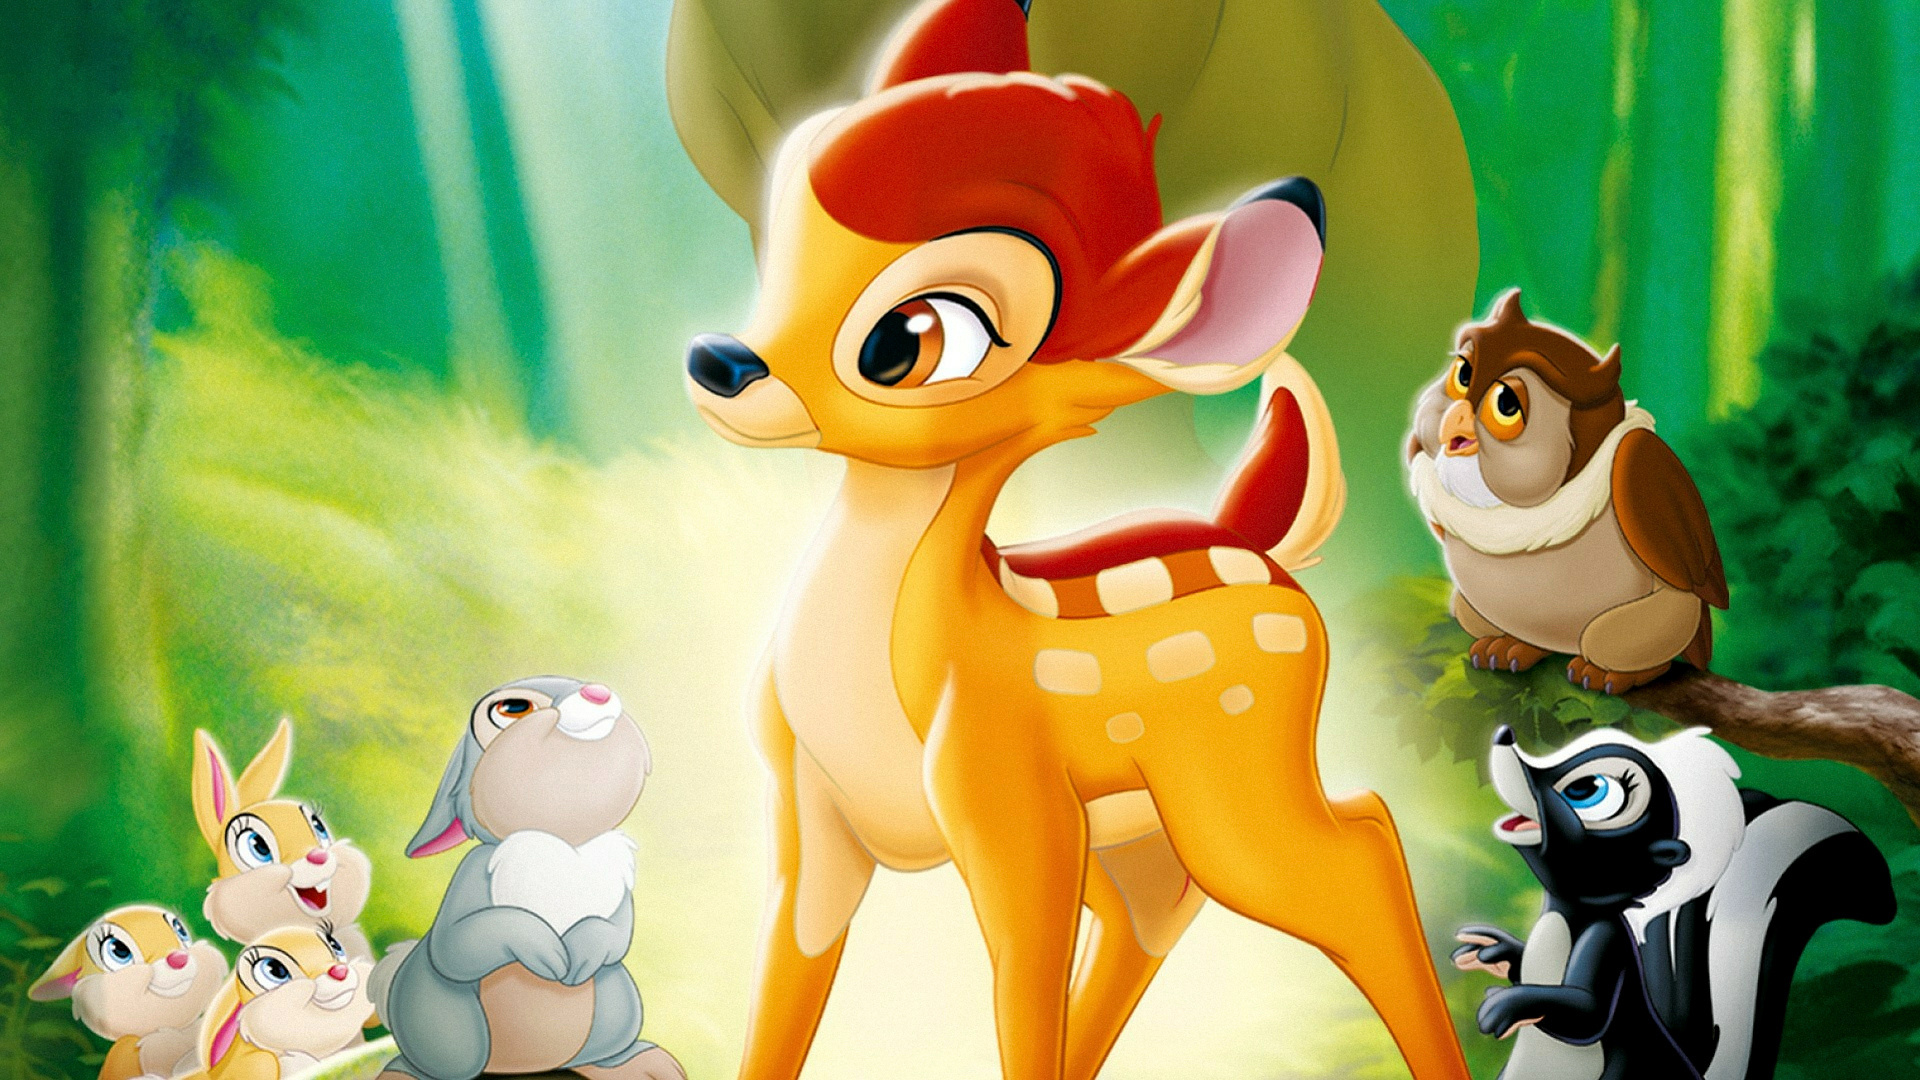 Bambi II movie fanart, Animated sequel, Delightful characters, Artistic representation, 1920x1080 Full HD Desktop